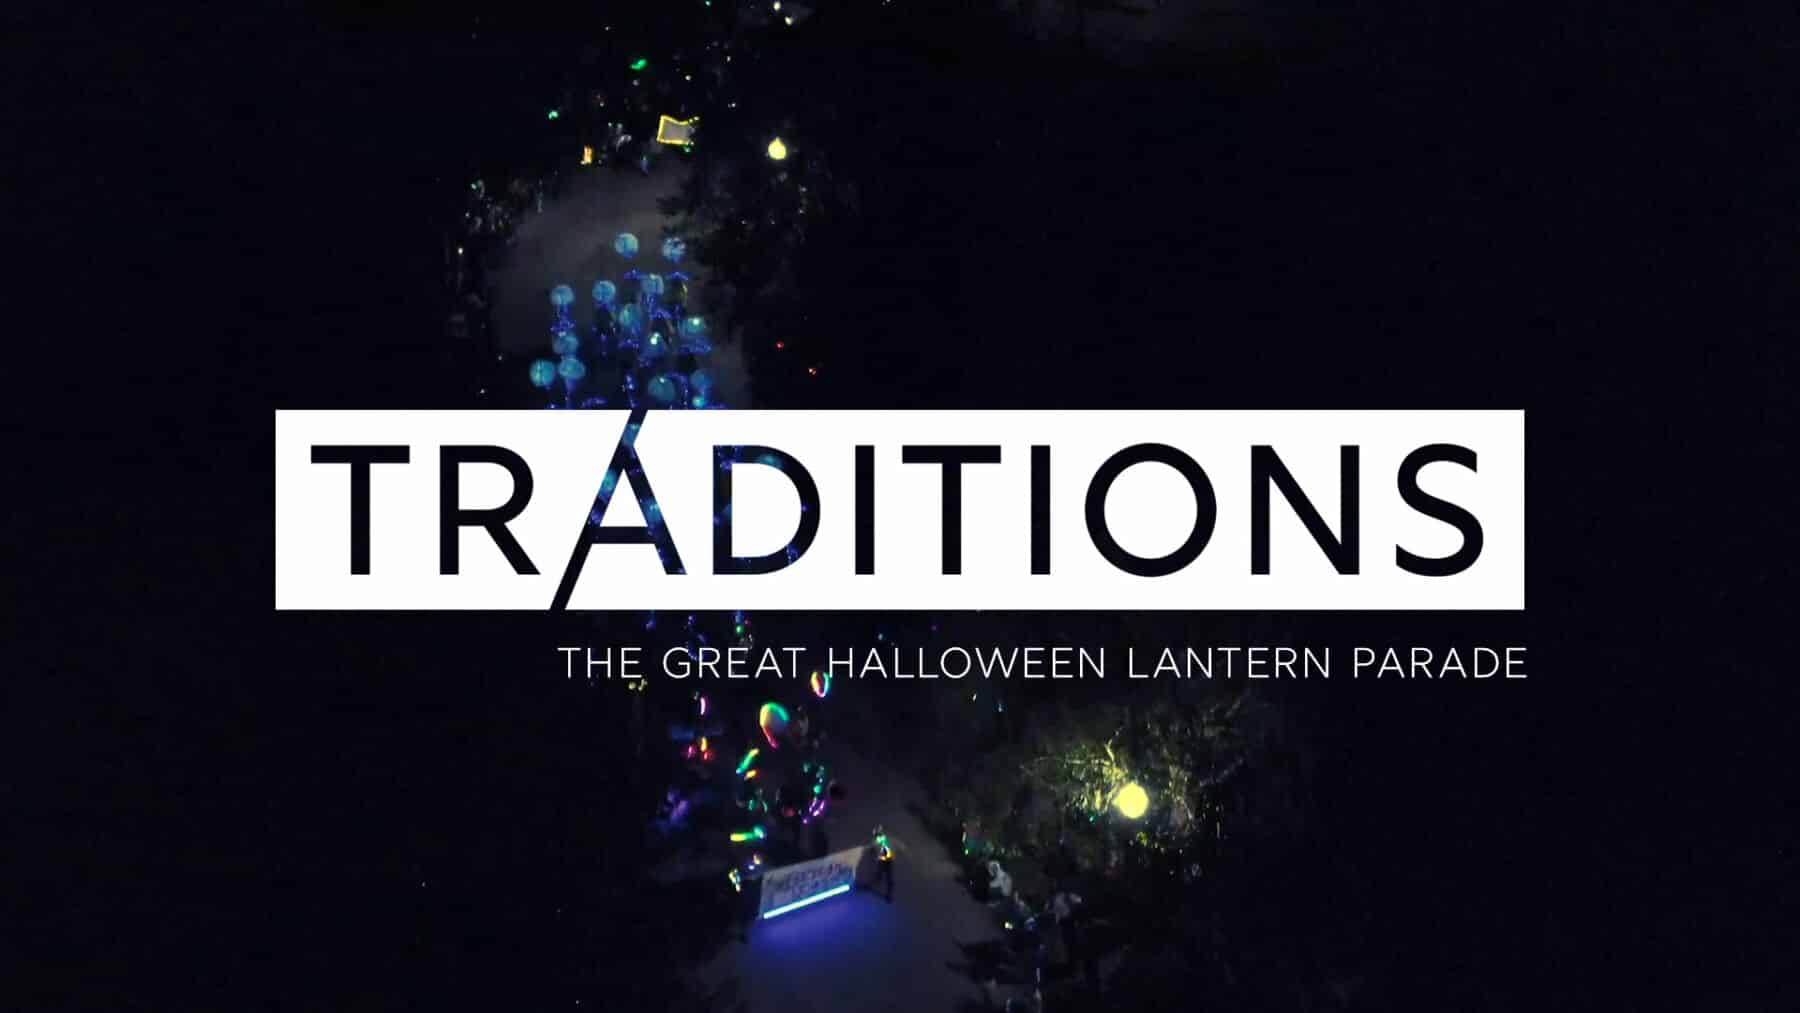 The Great Halloween Lantern Parade